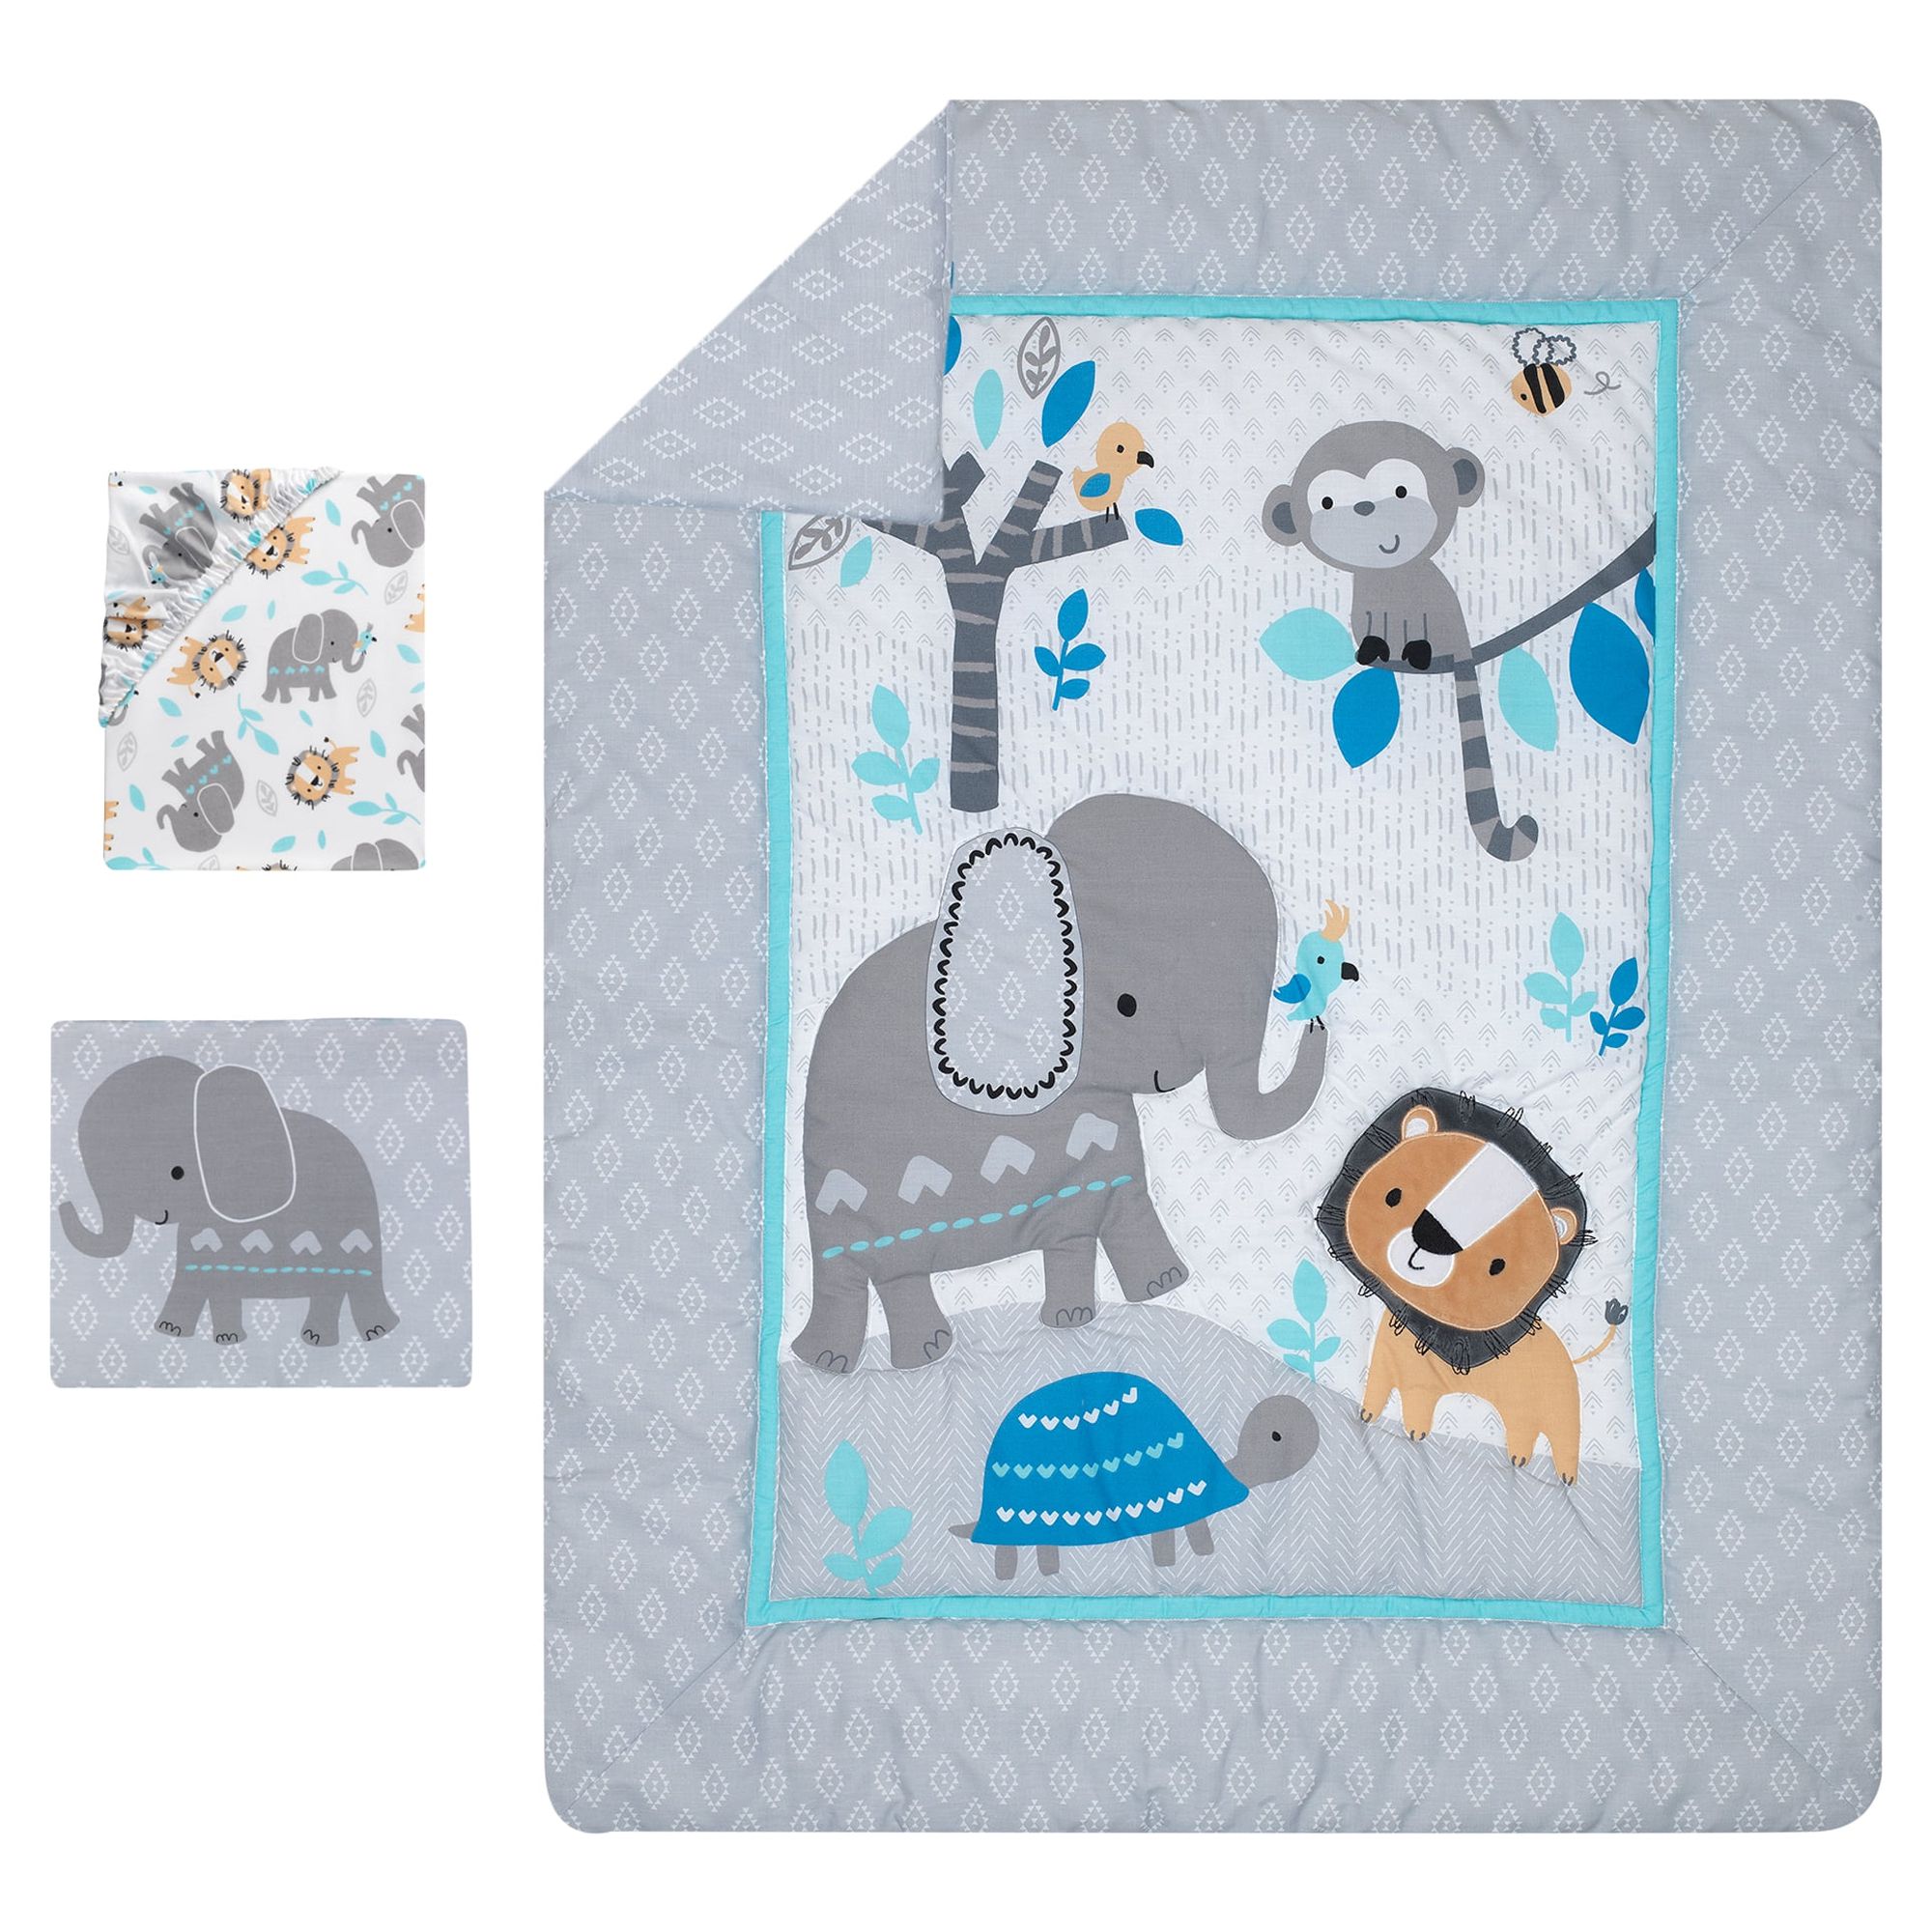 Bedtime Originals Jungle Fun 3-Piece Animals Crib Bedding Set - Blue, Gray, White - image 3 of 7